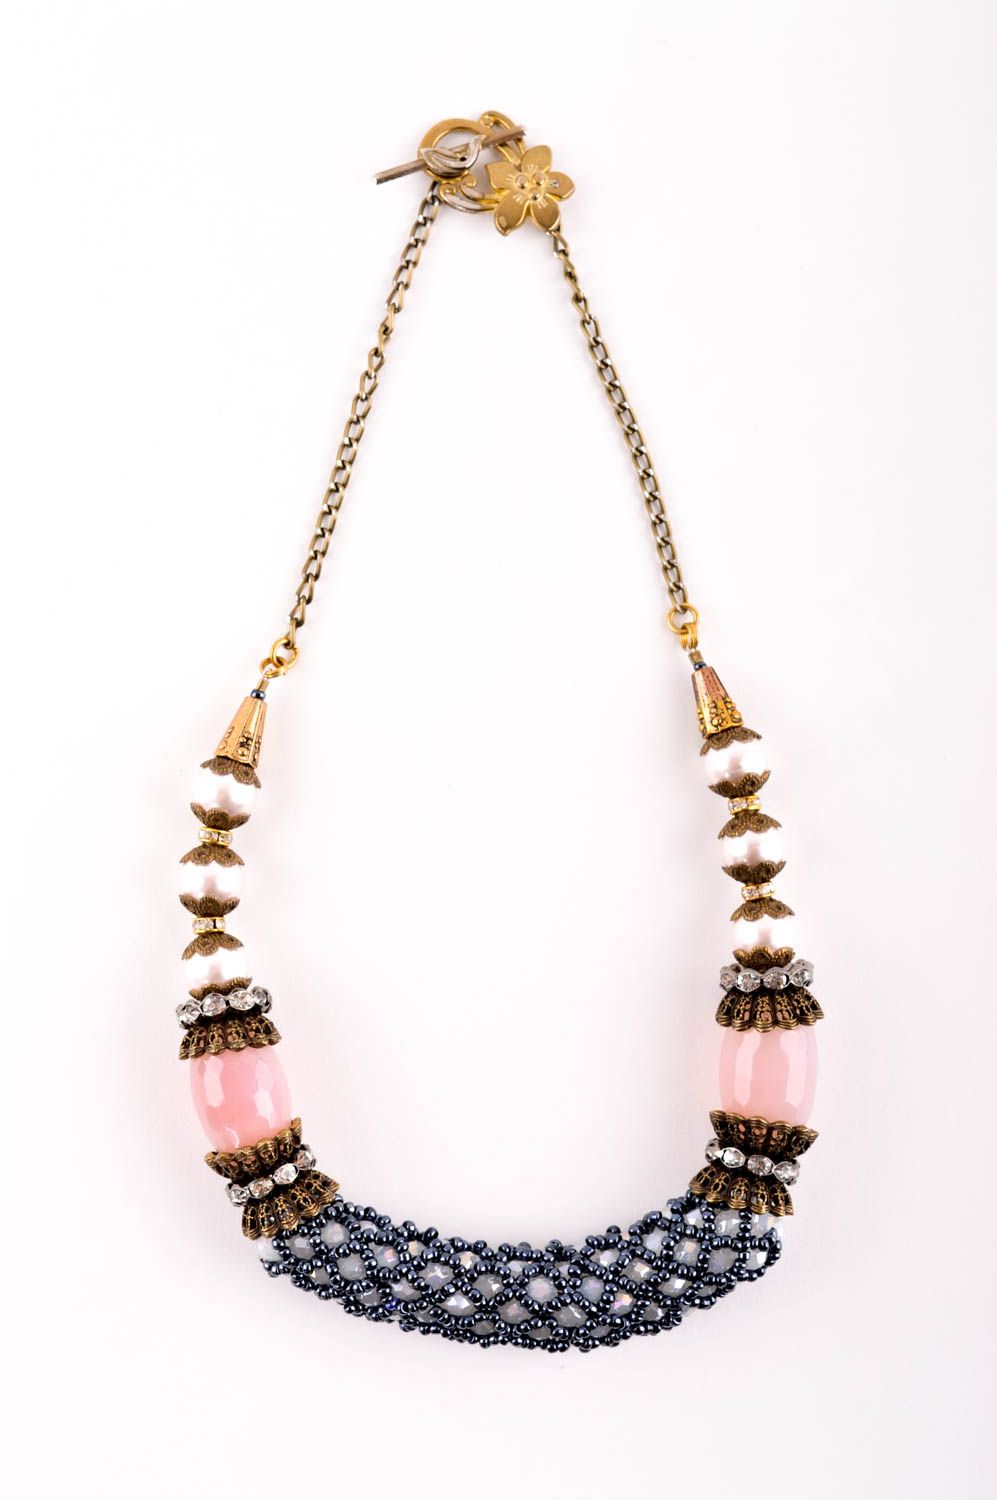 Handmade necklace designer ncklace with stone designer jewelry unusual accessory photo 2